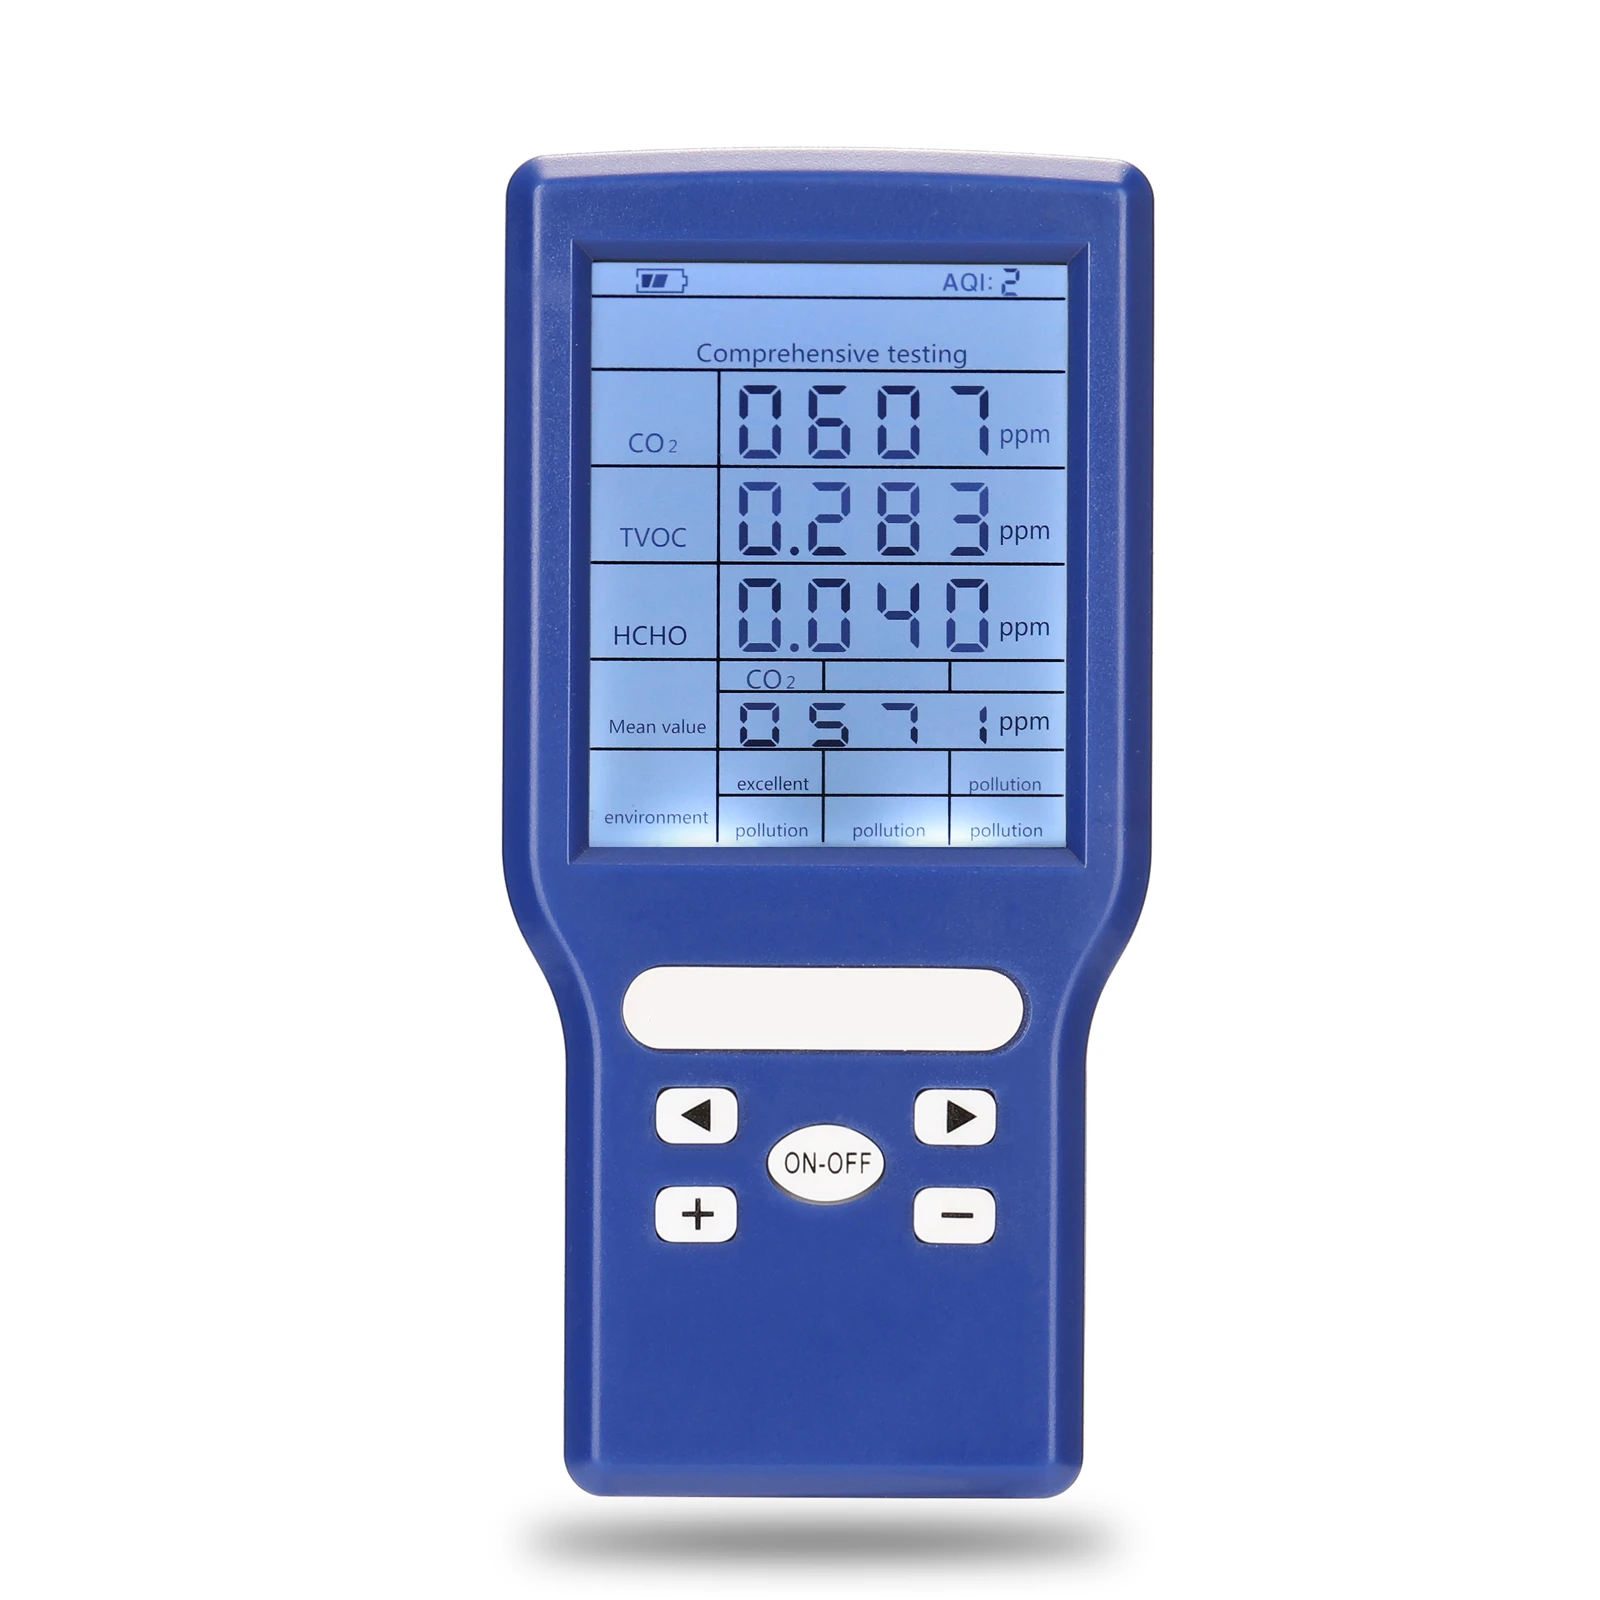 CO2 ppm Meters TVOC HCHO Carbon Dioxide Detector Gas Analyzer Air Quality Tester